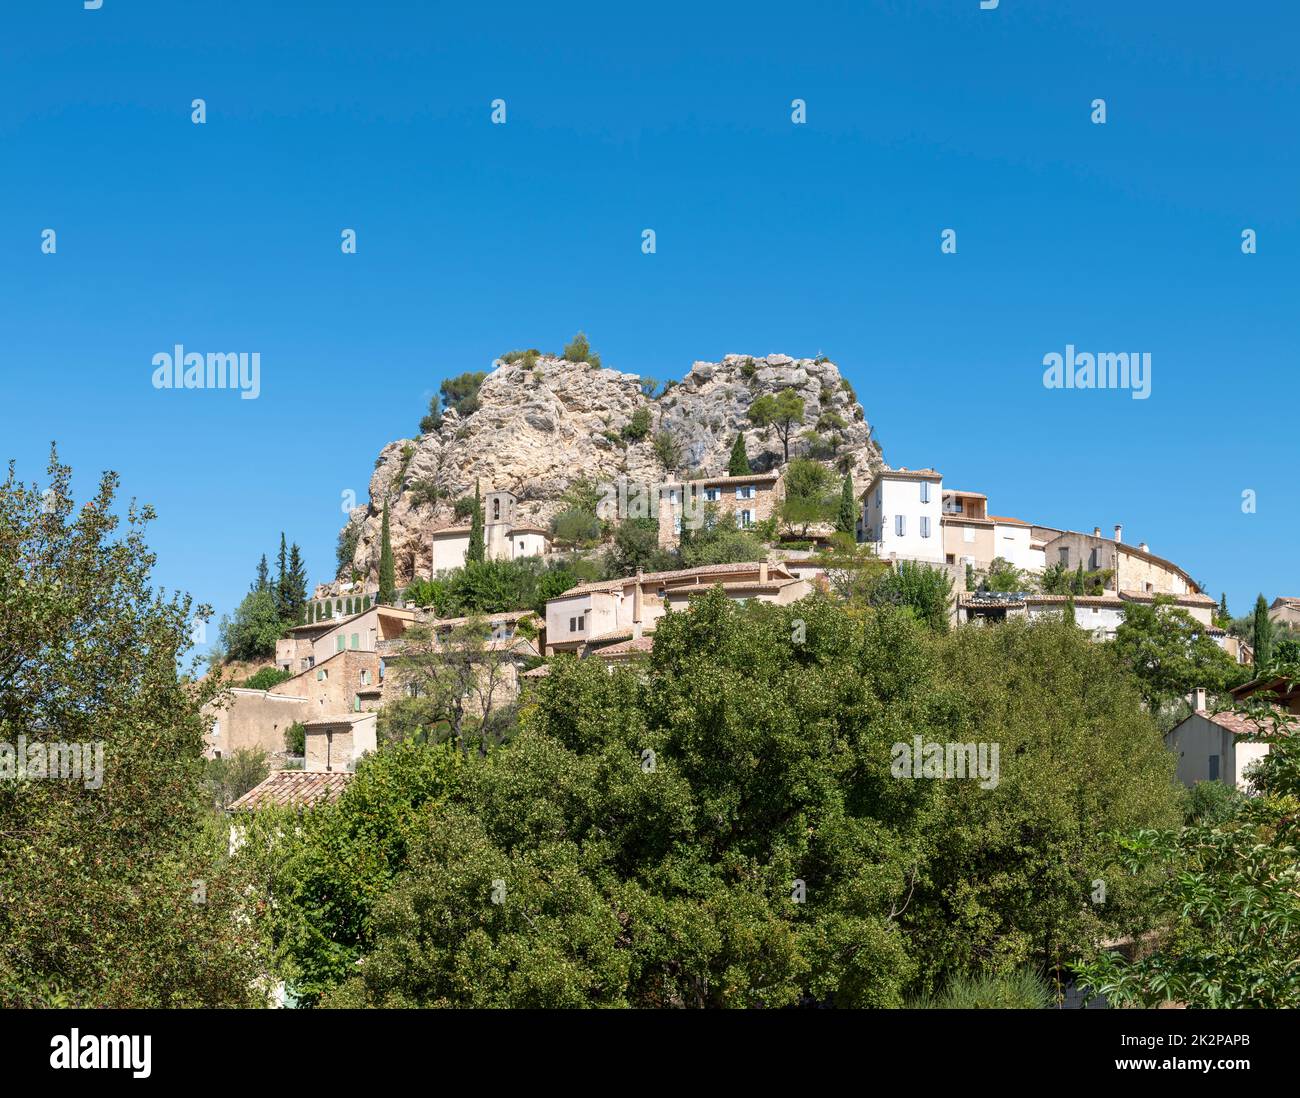 La Roque-Alric, Provence-Alpes-Côte d'Azur region in southeastern France Stock Photo